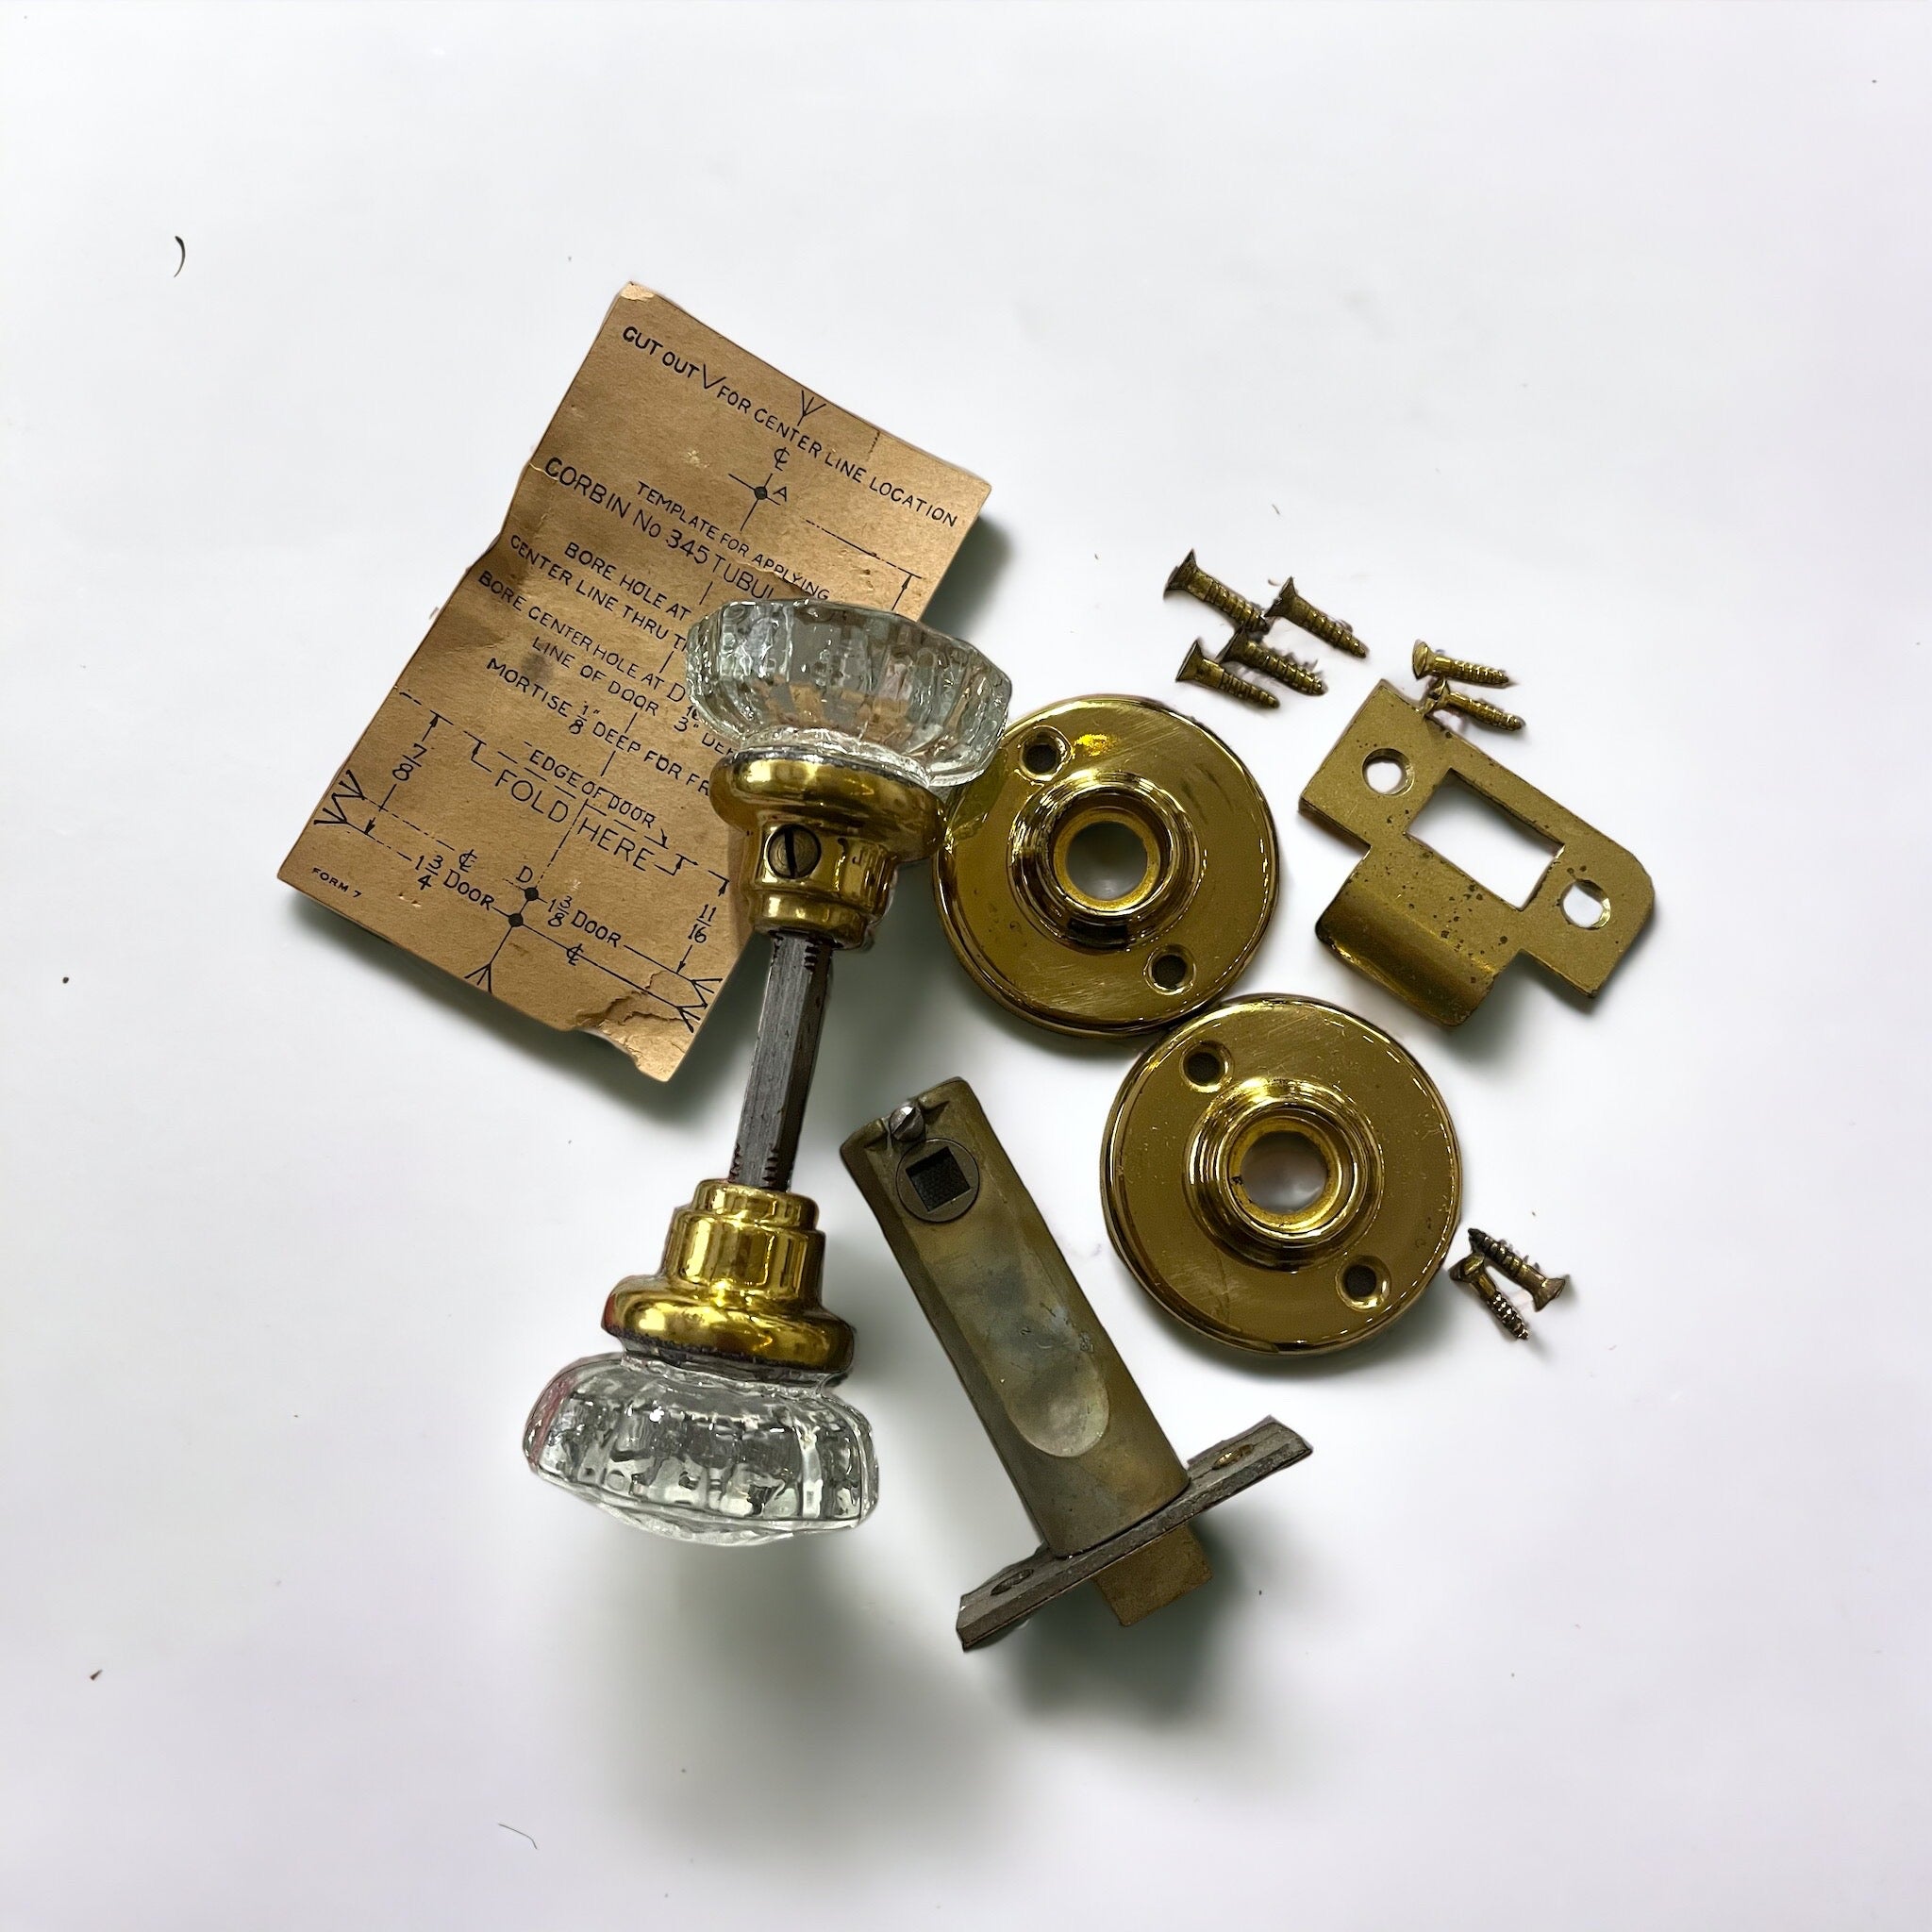 New Old Stock Antique Glass Knob Set with Corbin Tubular Latch